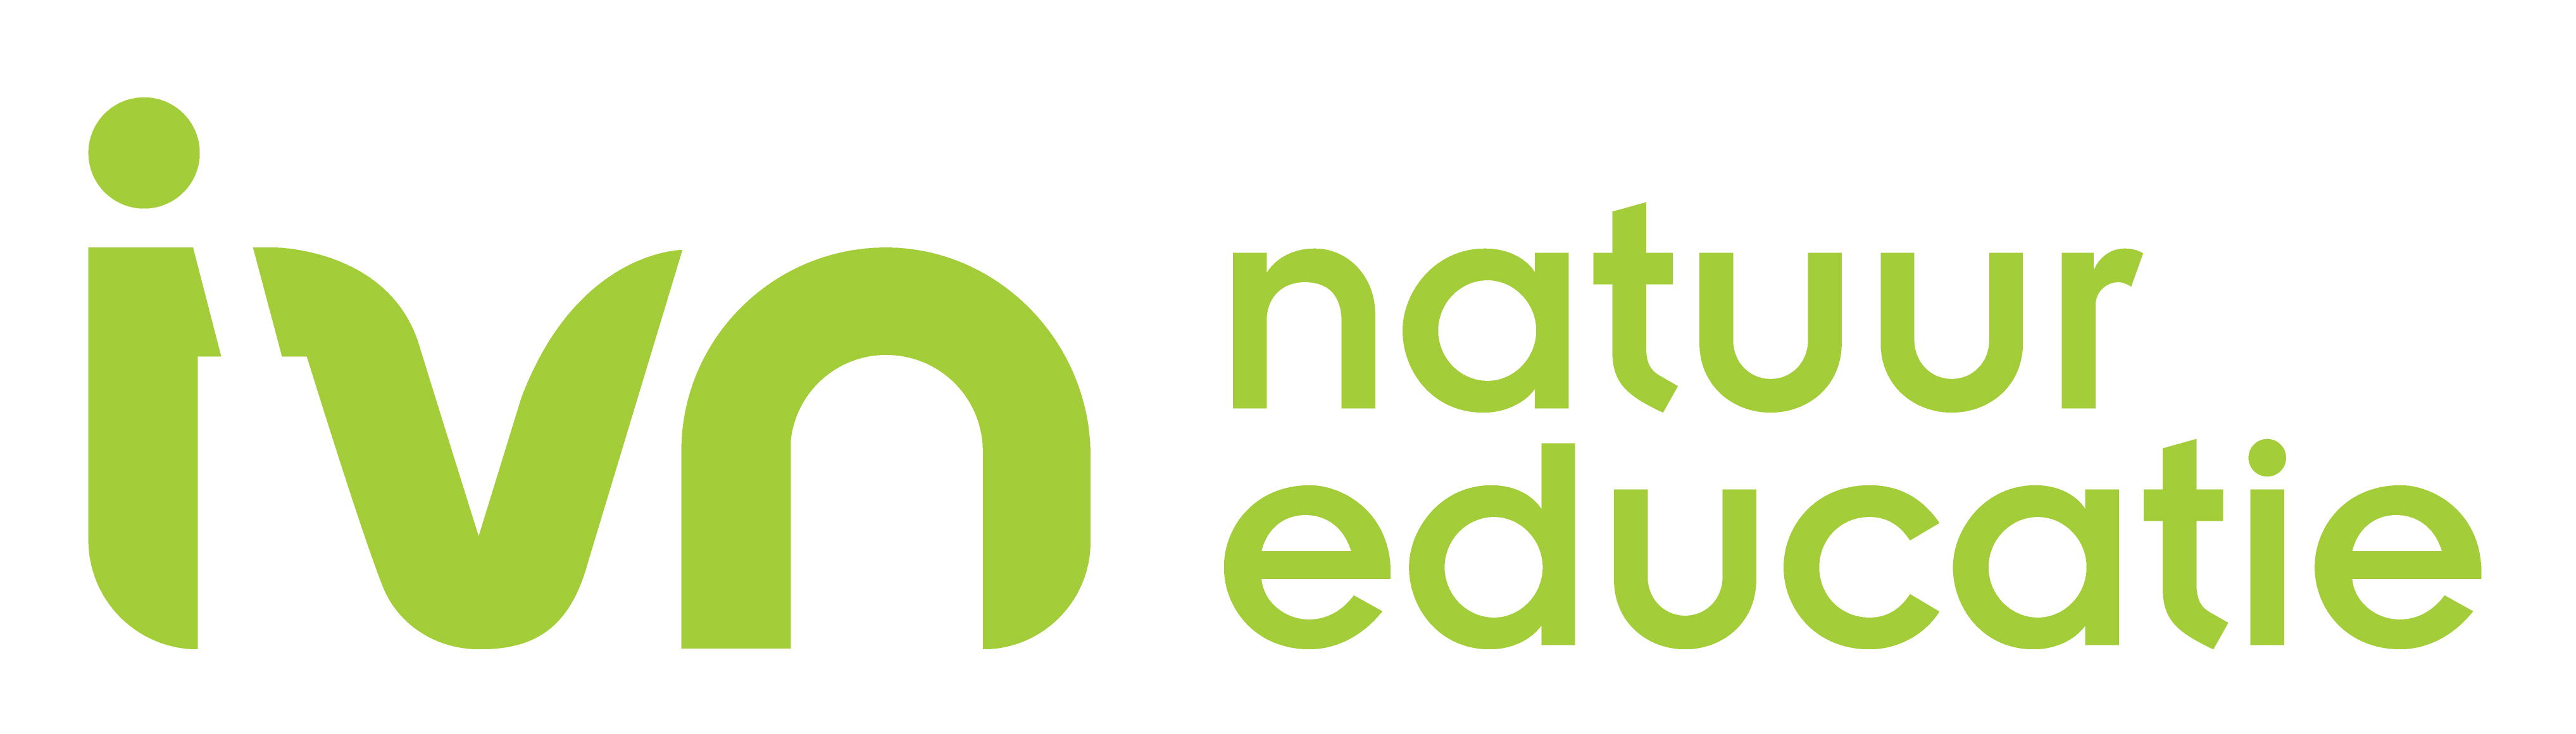 IVN natuur educatie logo